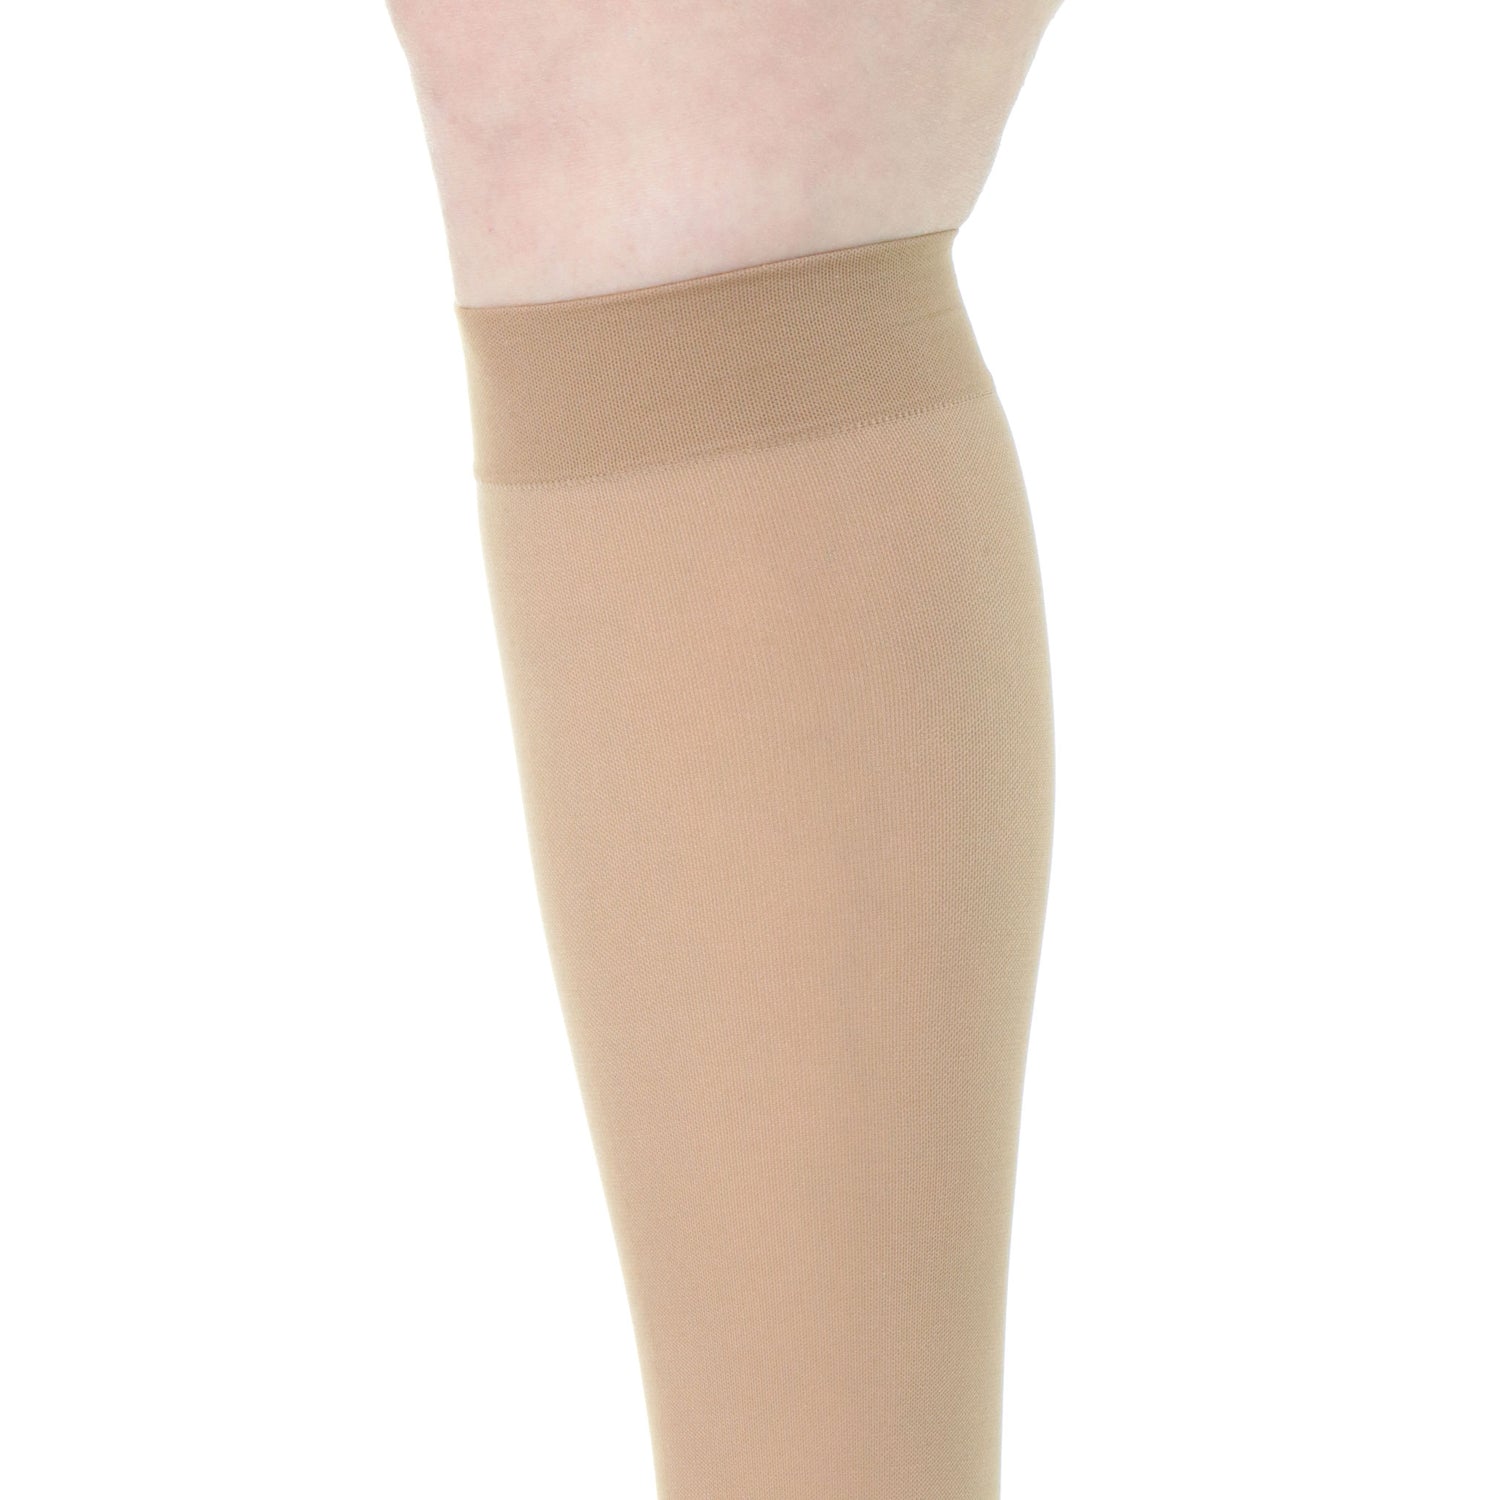 Thigh High Compression Stockings 20-30 mmHg Medical Varicose Veins Edema  Socks